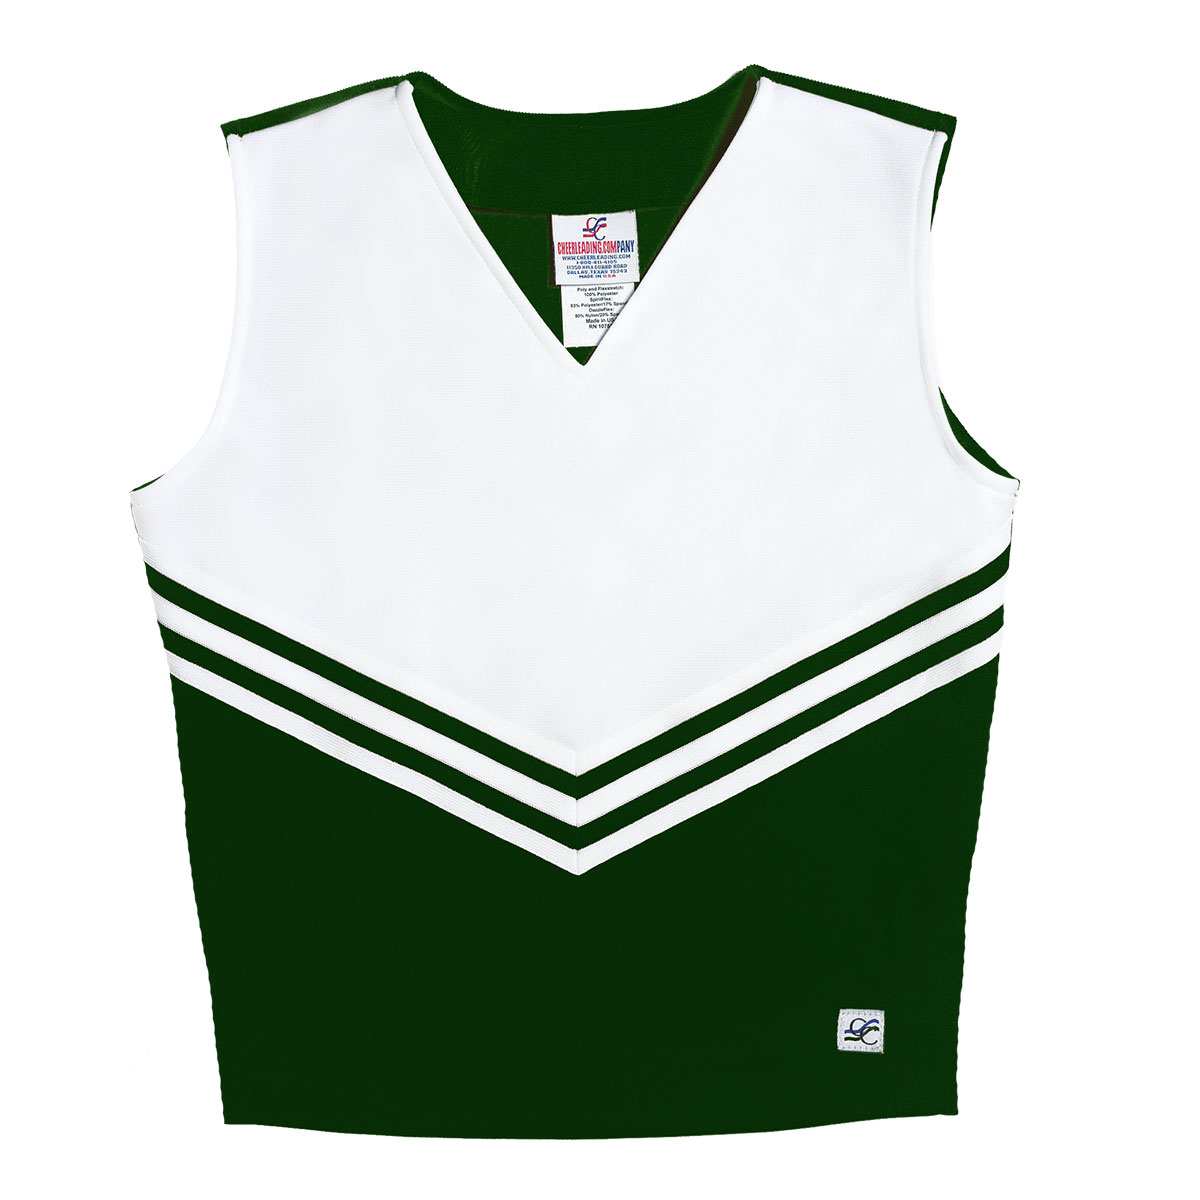 WOMEN's Size 36 Cheerleader Sweater GREEN over WHITE Green / White 